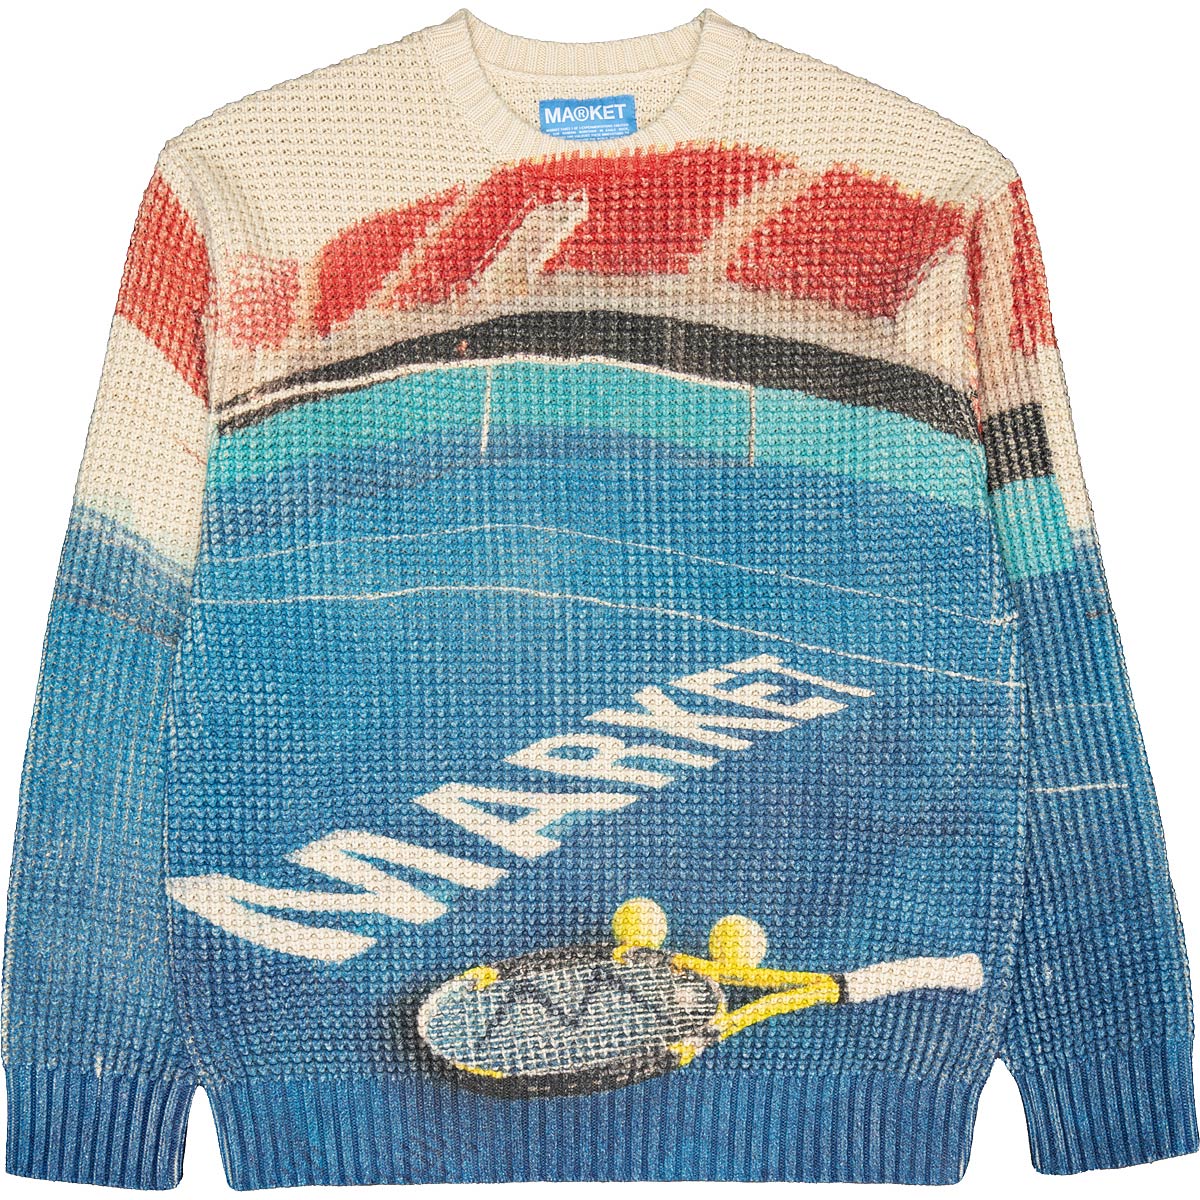 Image of Market Caja Magica Sweater, Blau